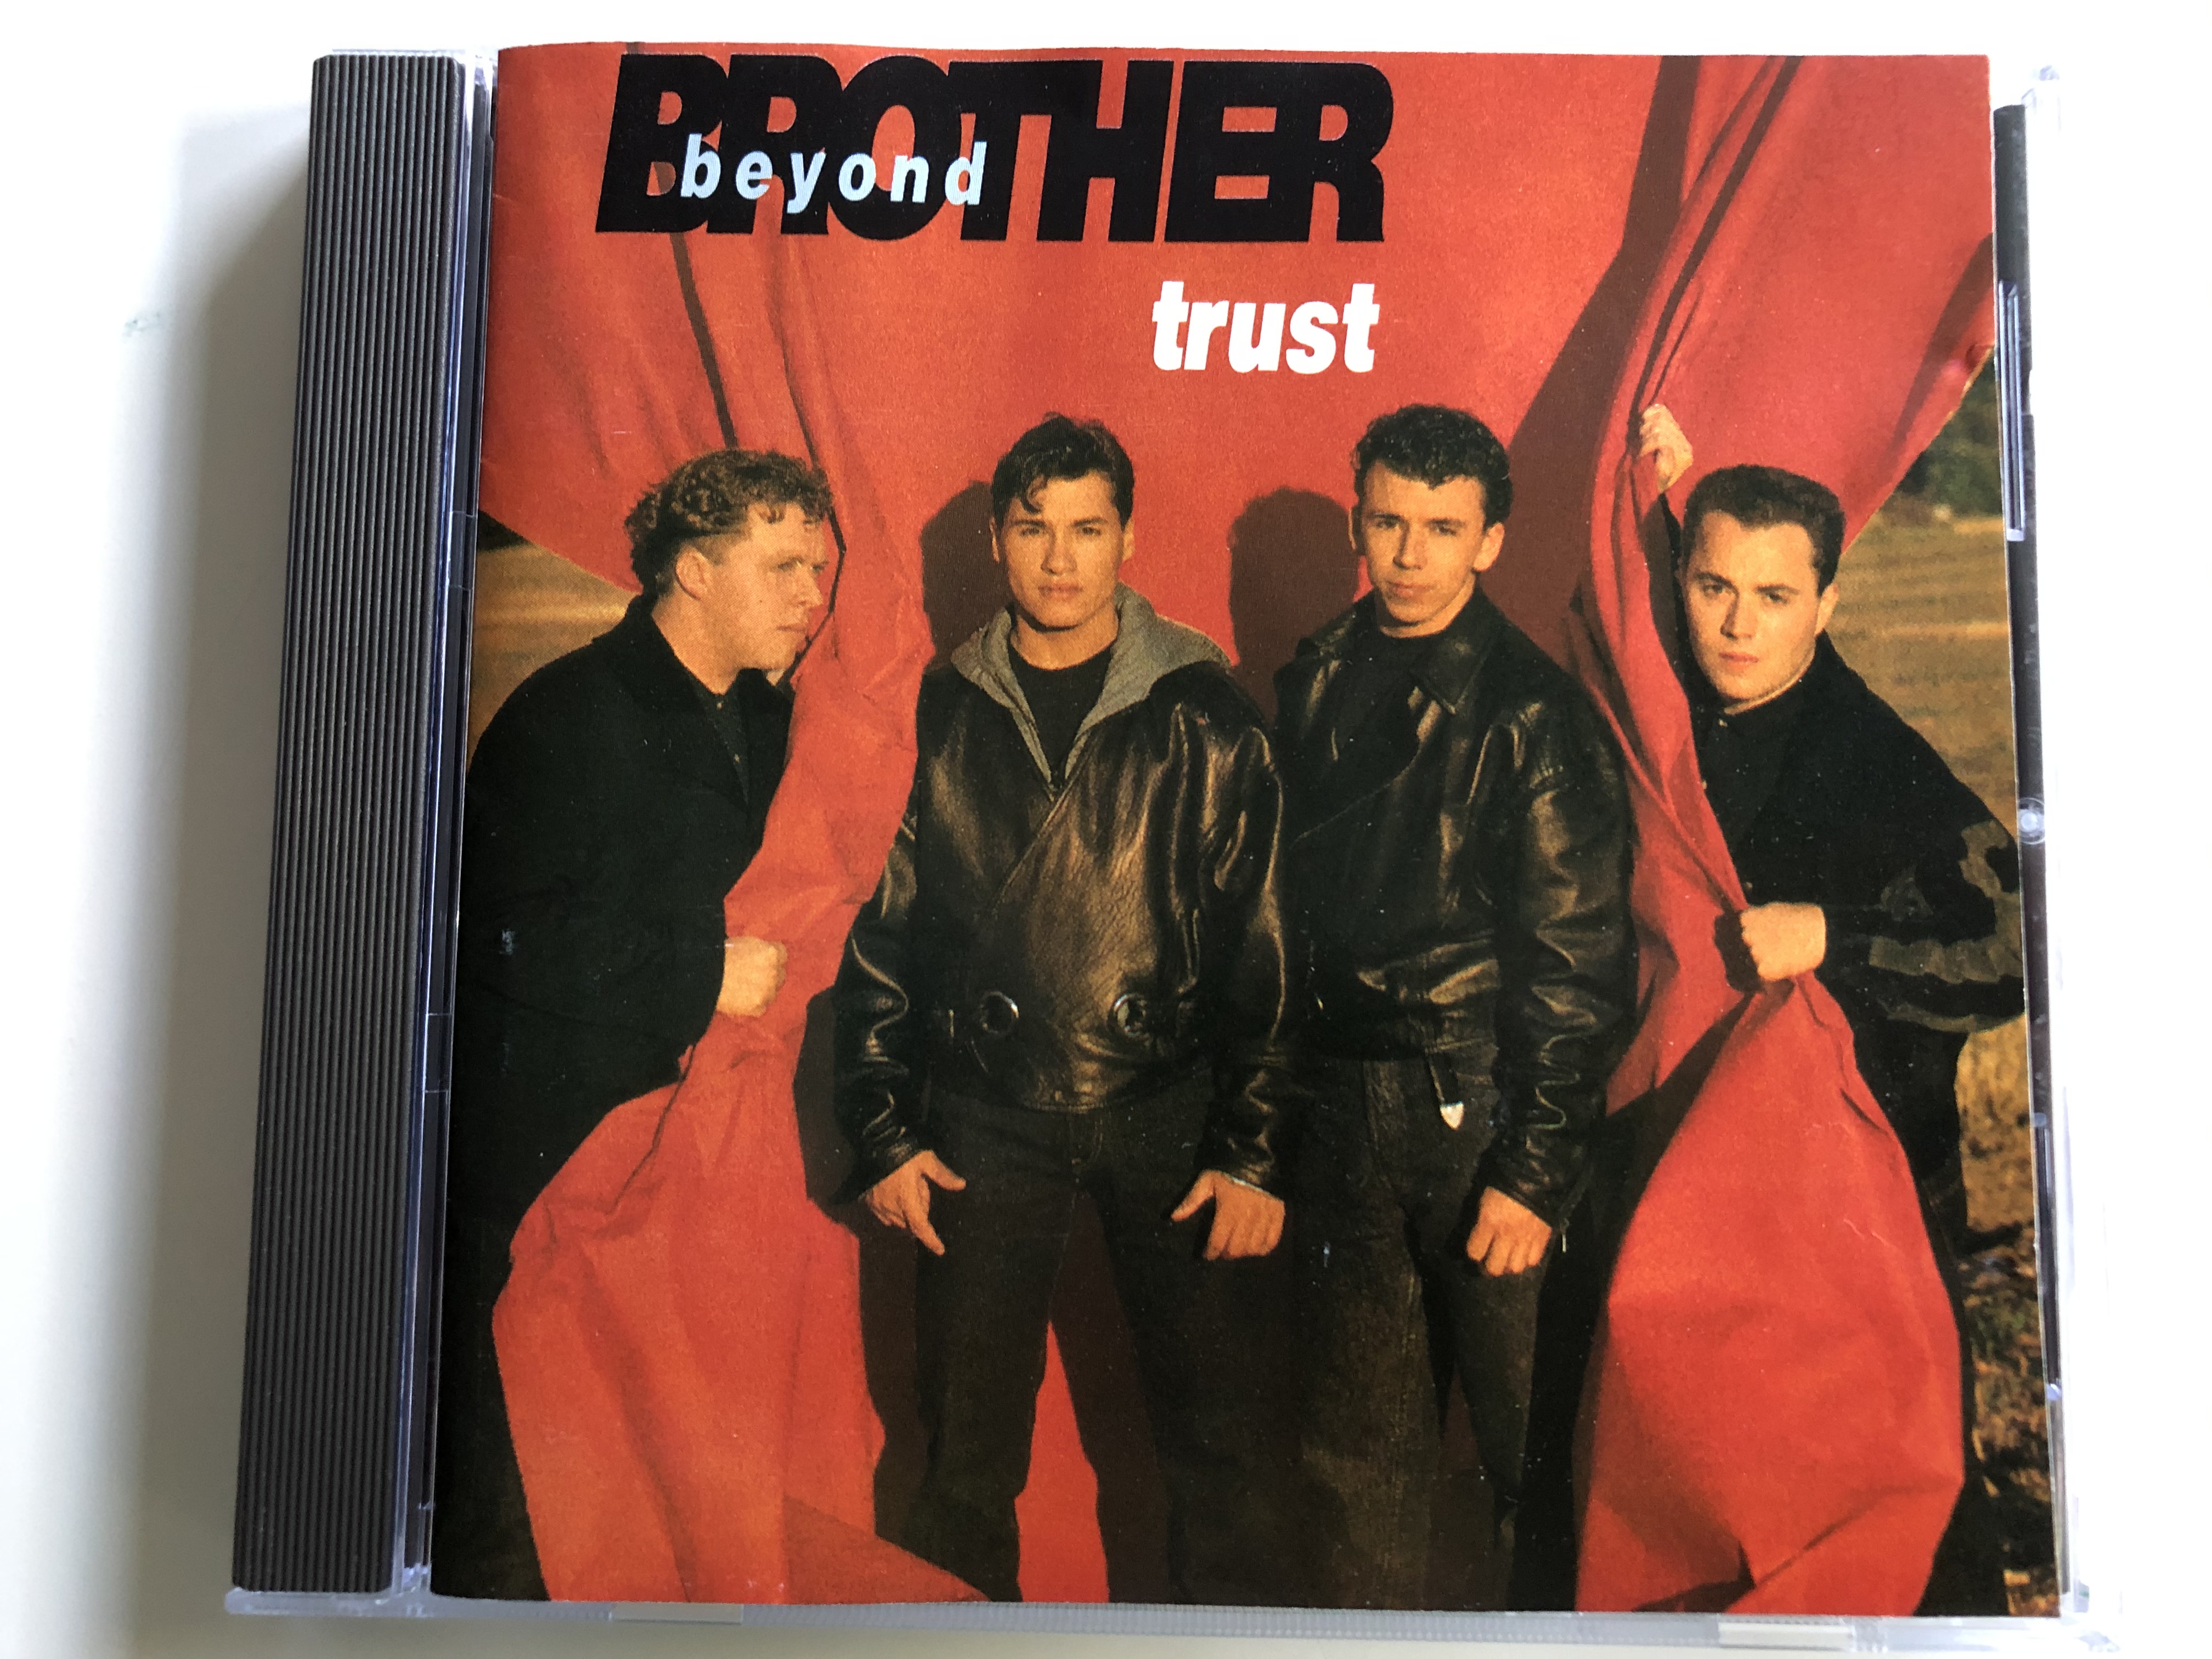 brother-beyond-trust-gong-audio-cd-1989-hcdl-37373-1-.jpg